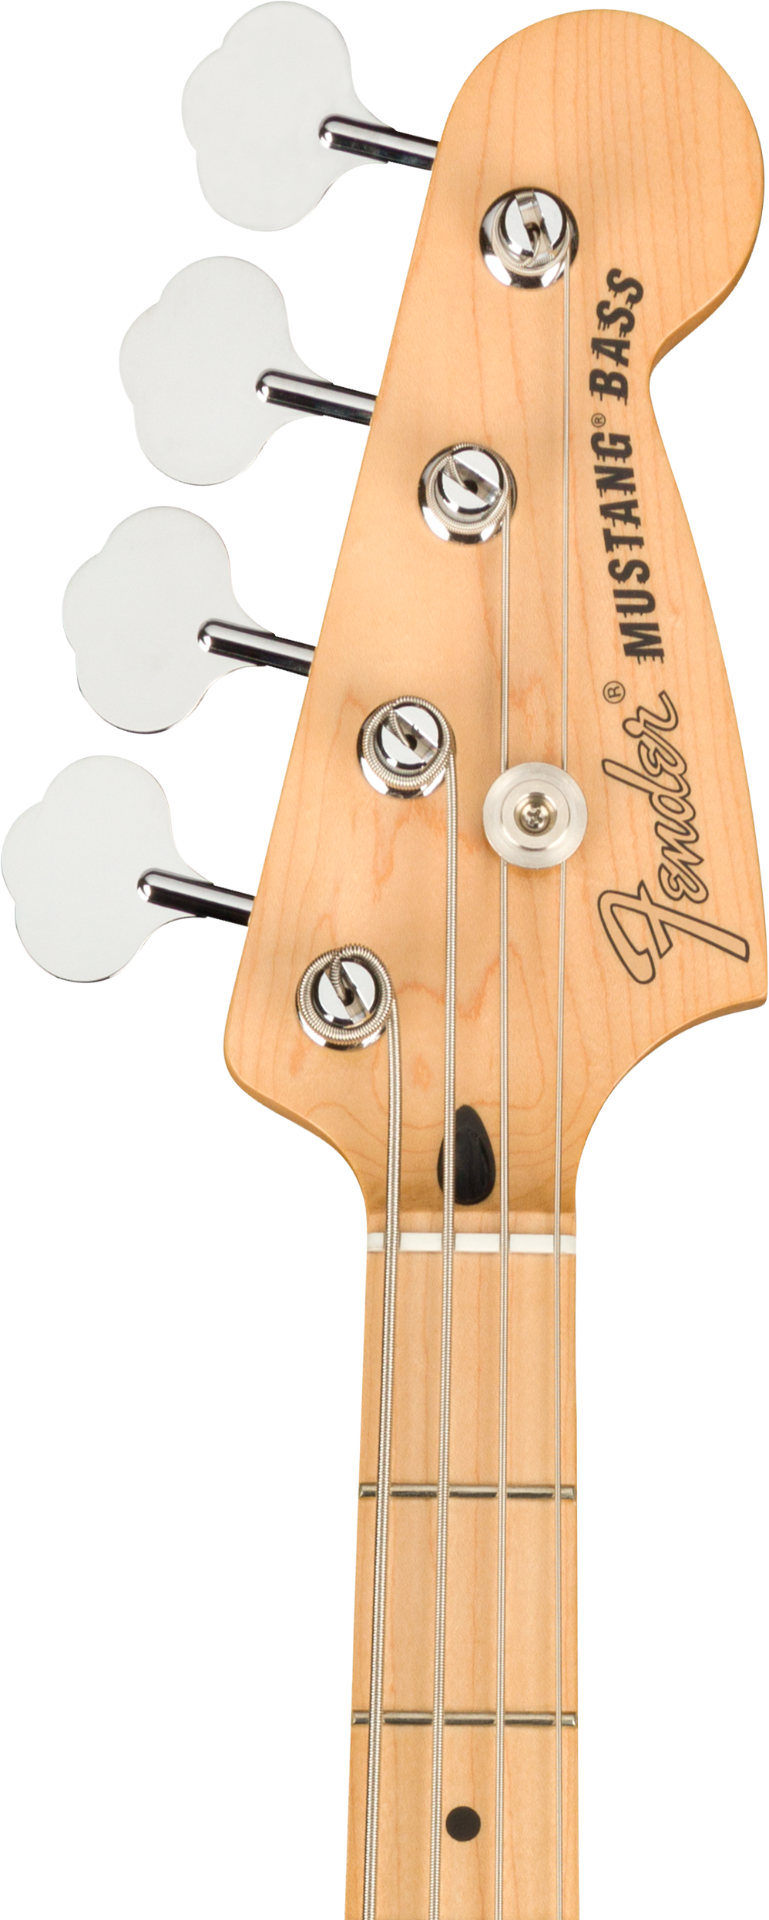 Fender Player Mustang Bass PJ - Sienna Sunburst